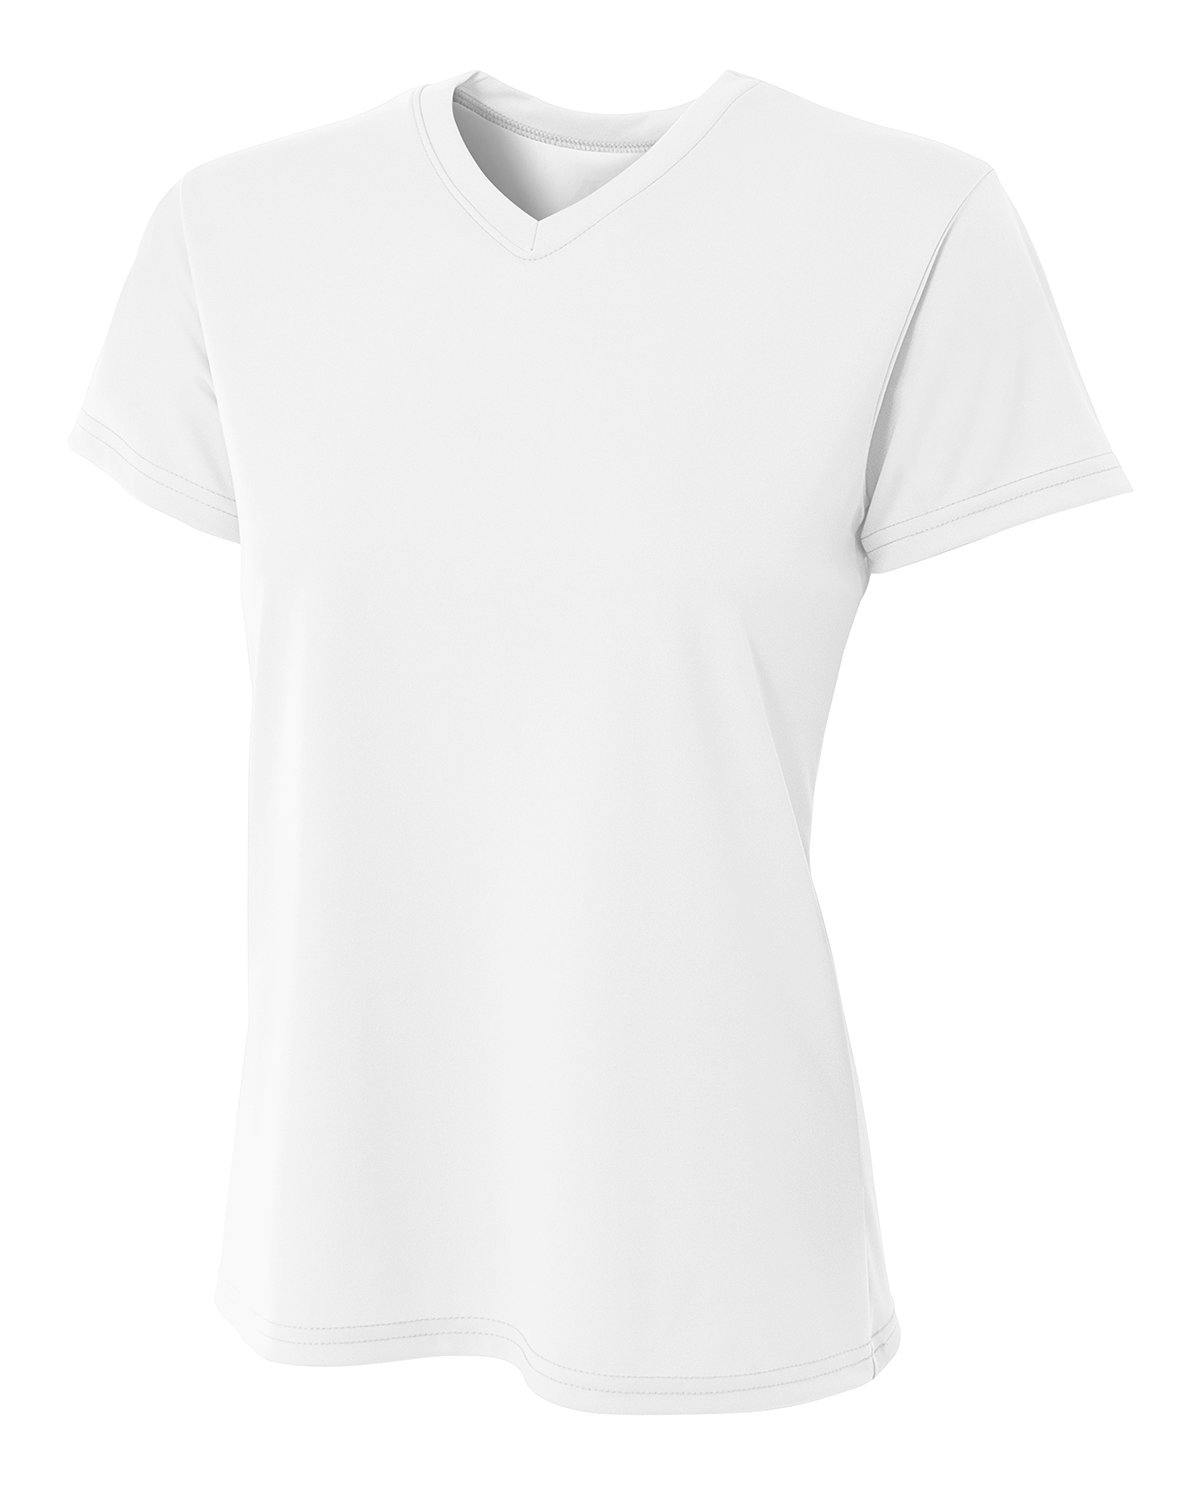 Image for Ladies' Sprint Performance V-Neck T-Shirt